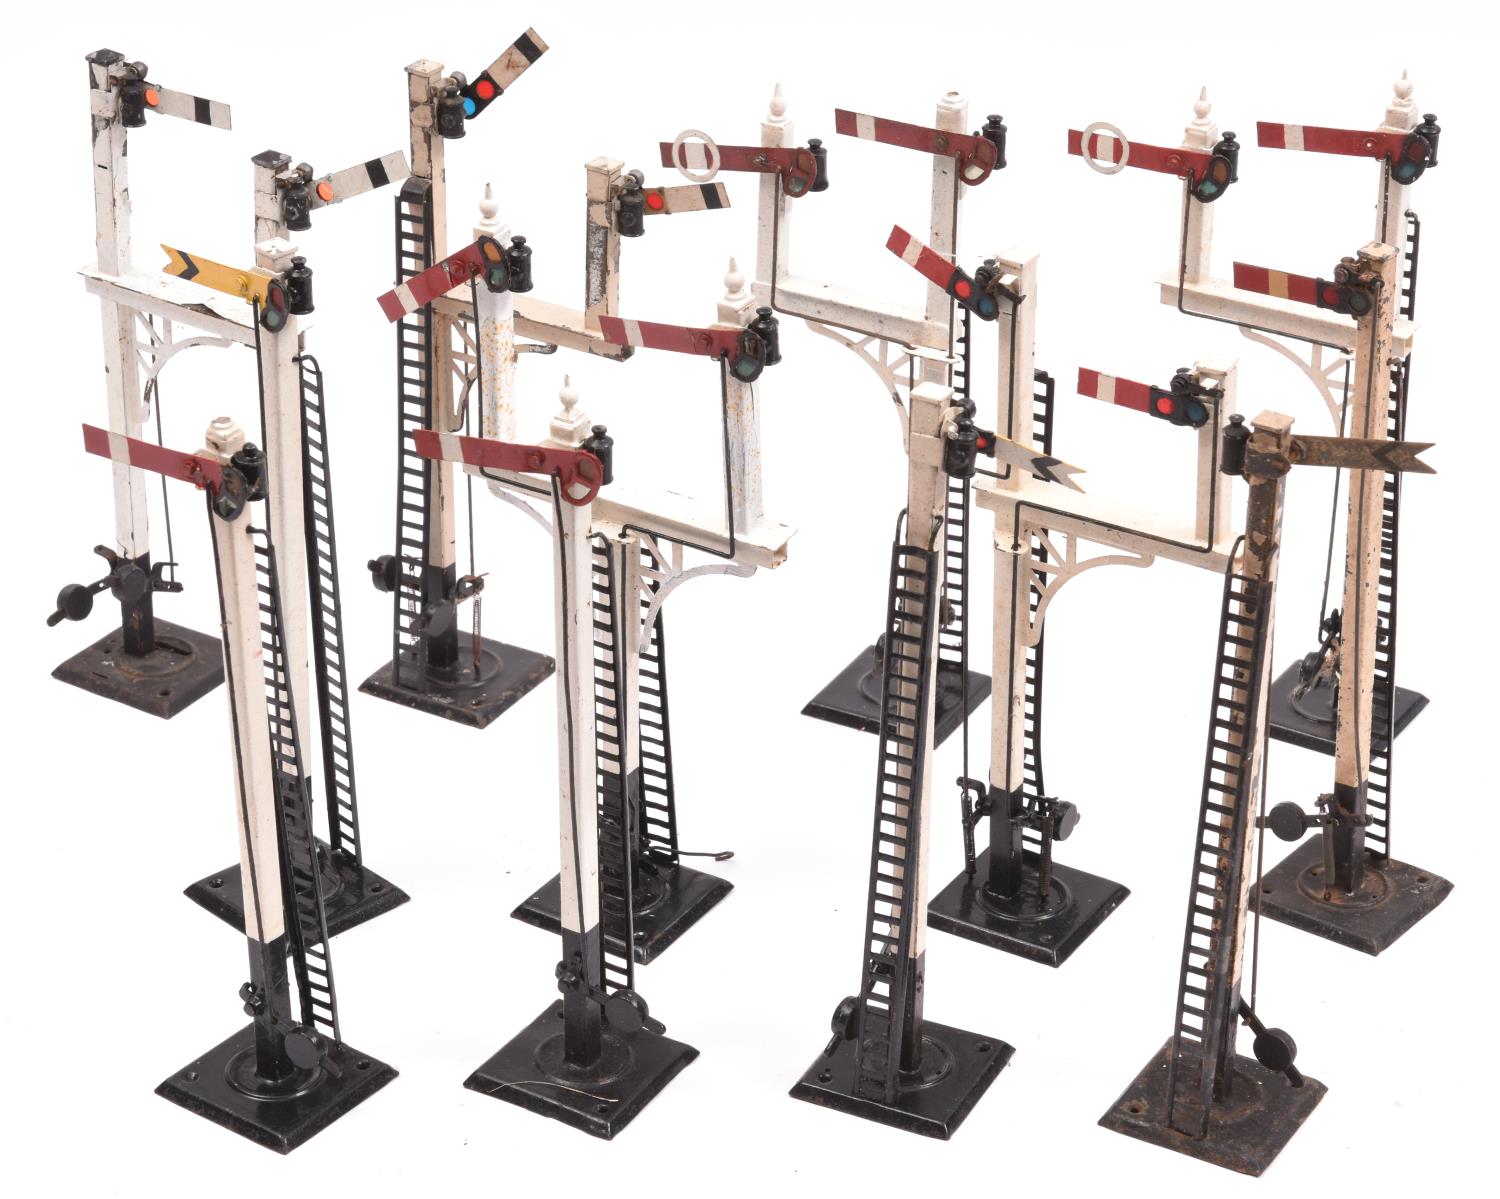 12x O Gauge model railway semaphore signals by Bassett Lowke. Including 3x single arm Home